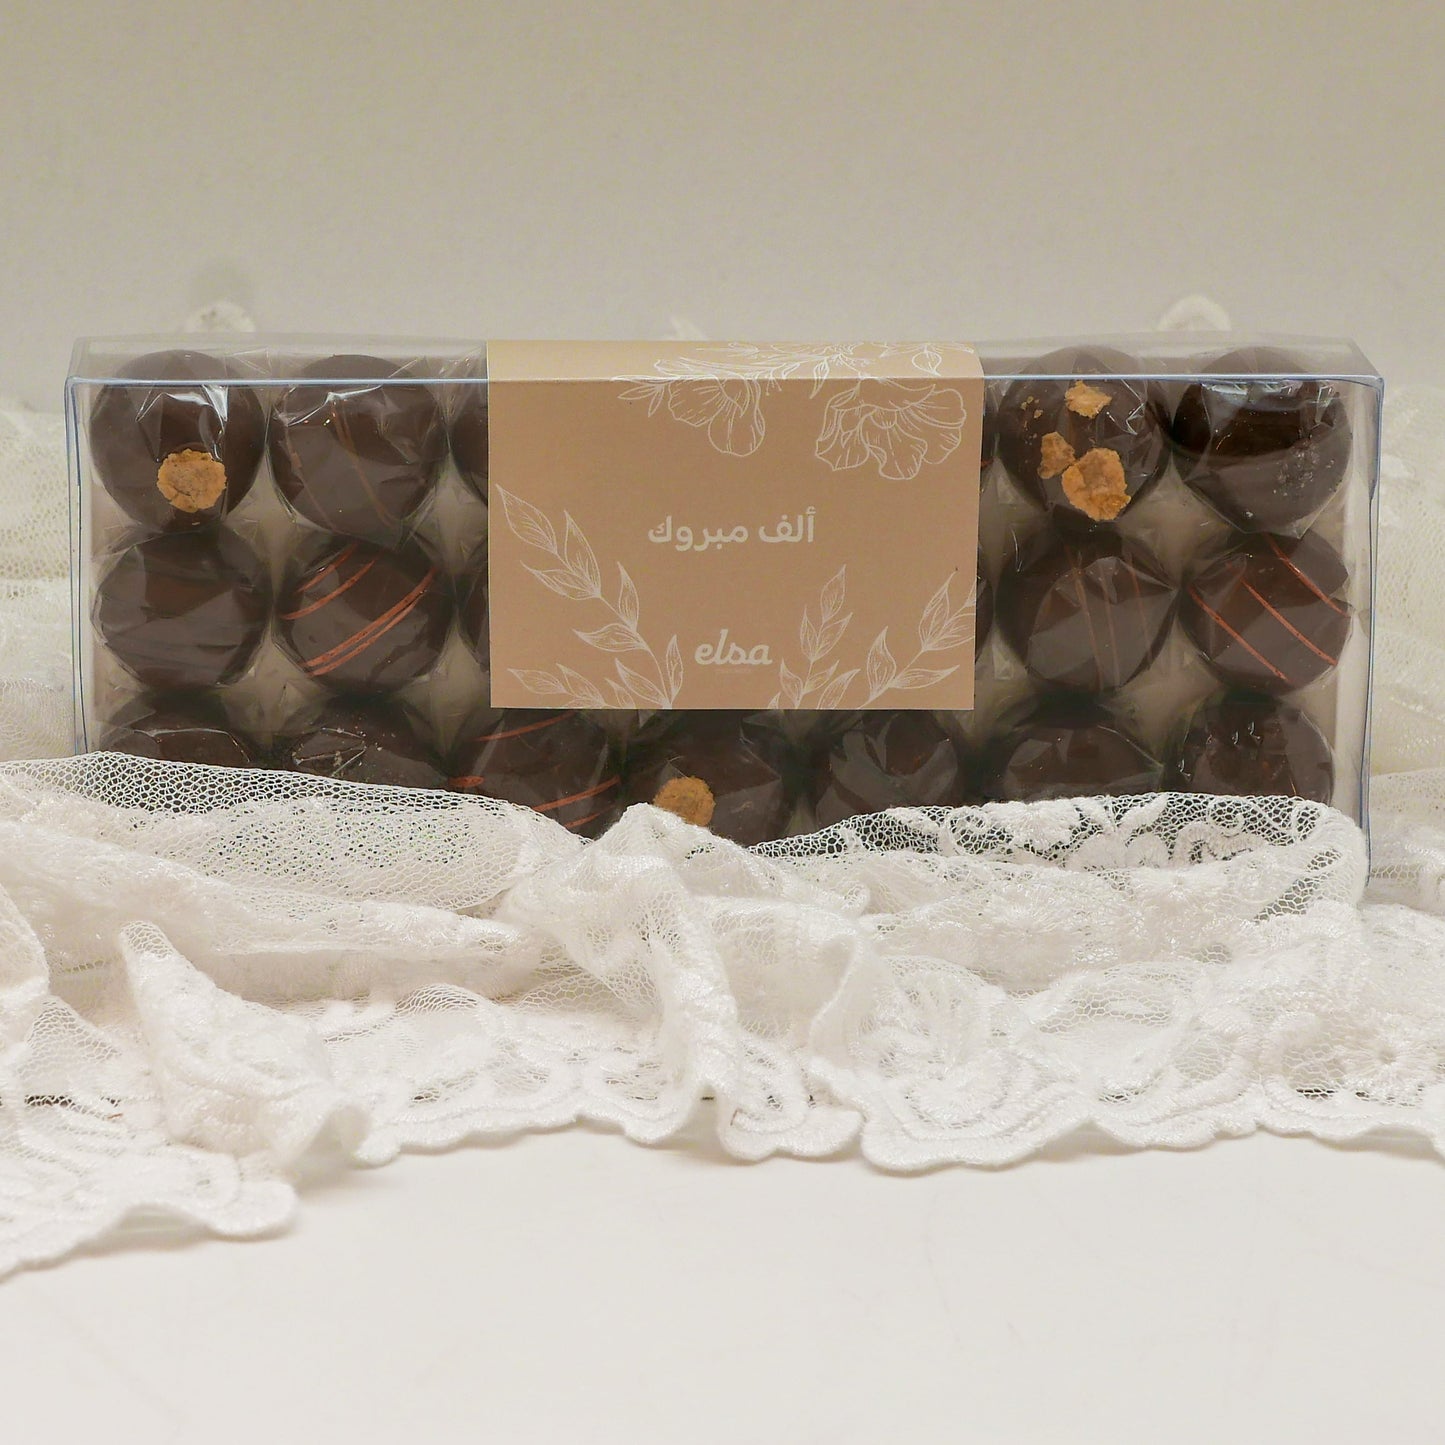 MABROUK - Dome Chocolate Box - Arabic